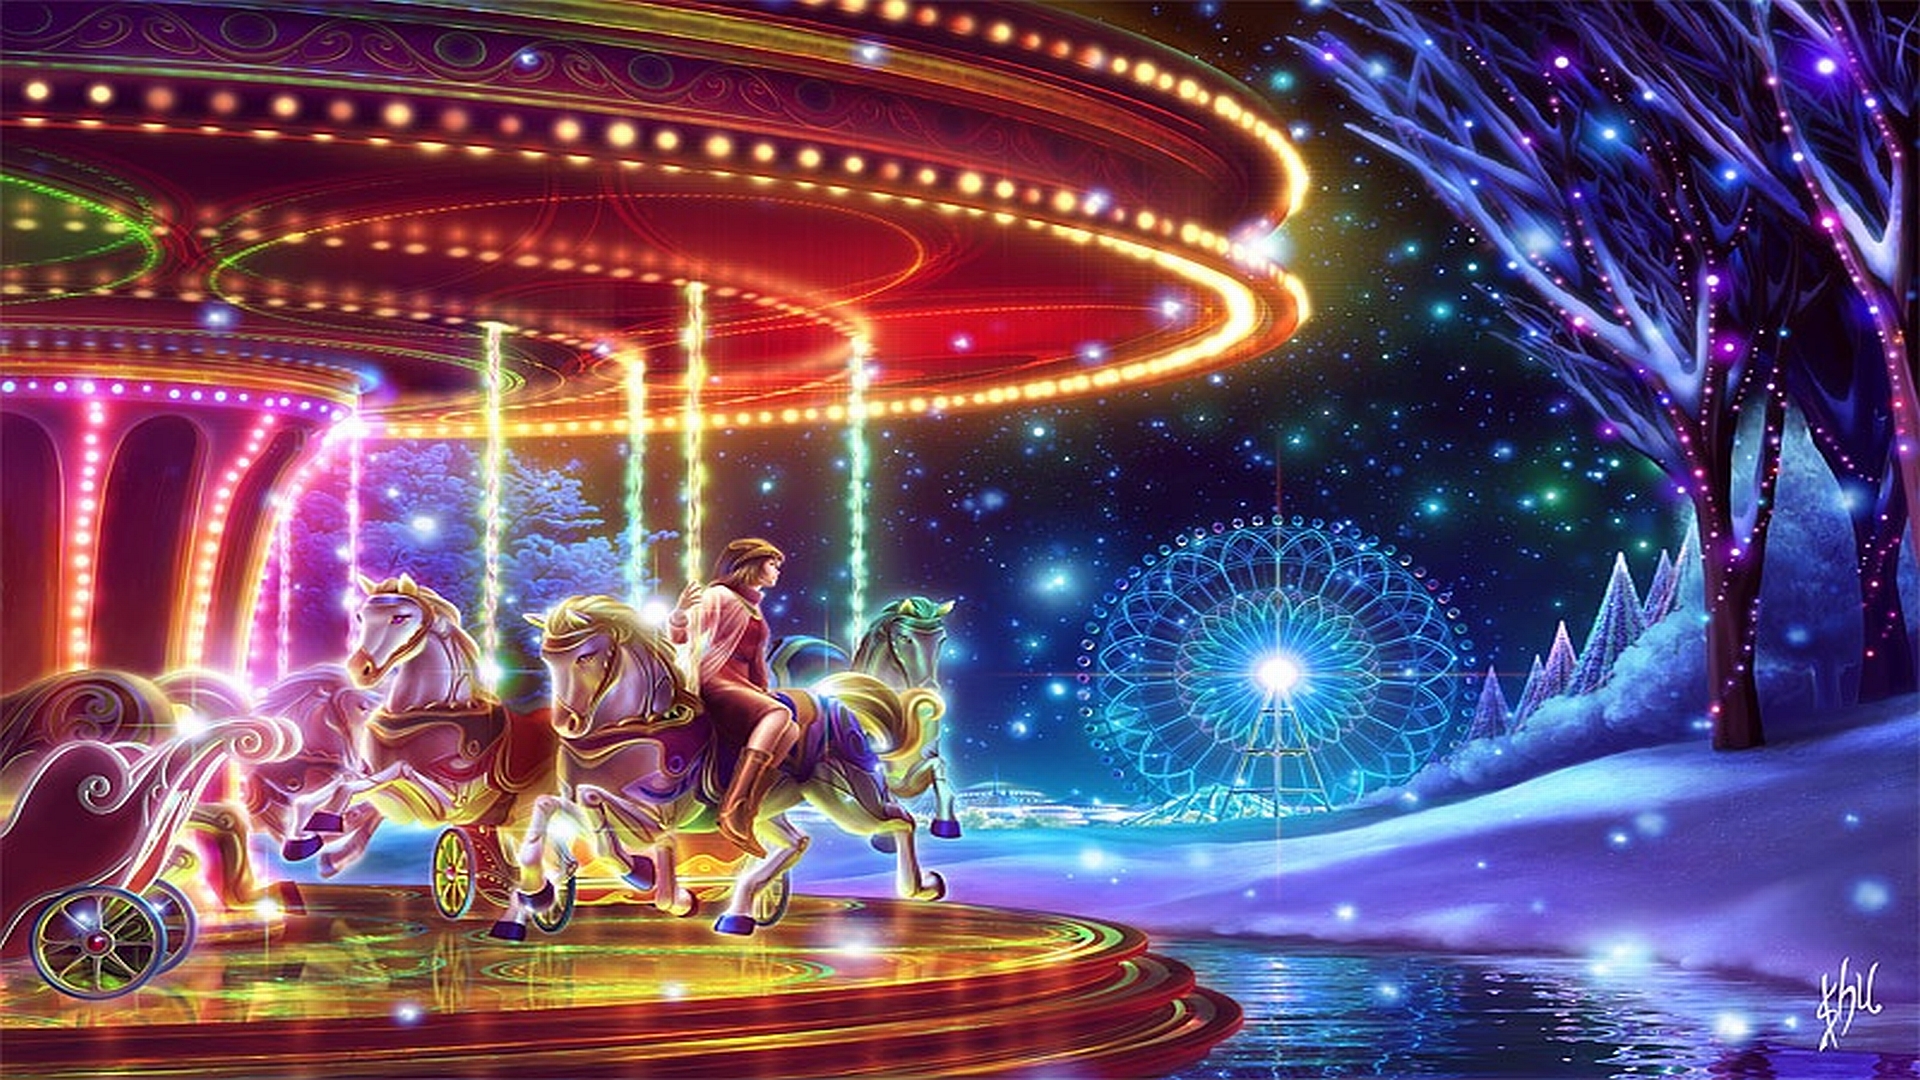 Carousel by Shuichi